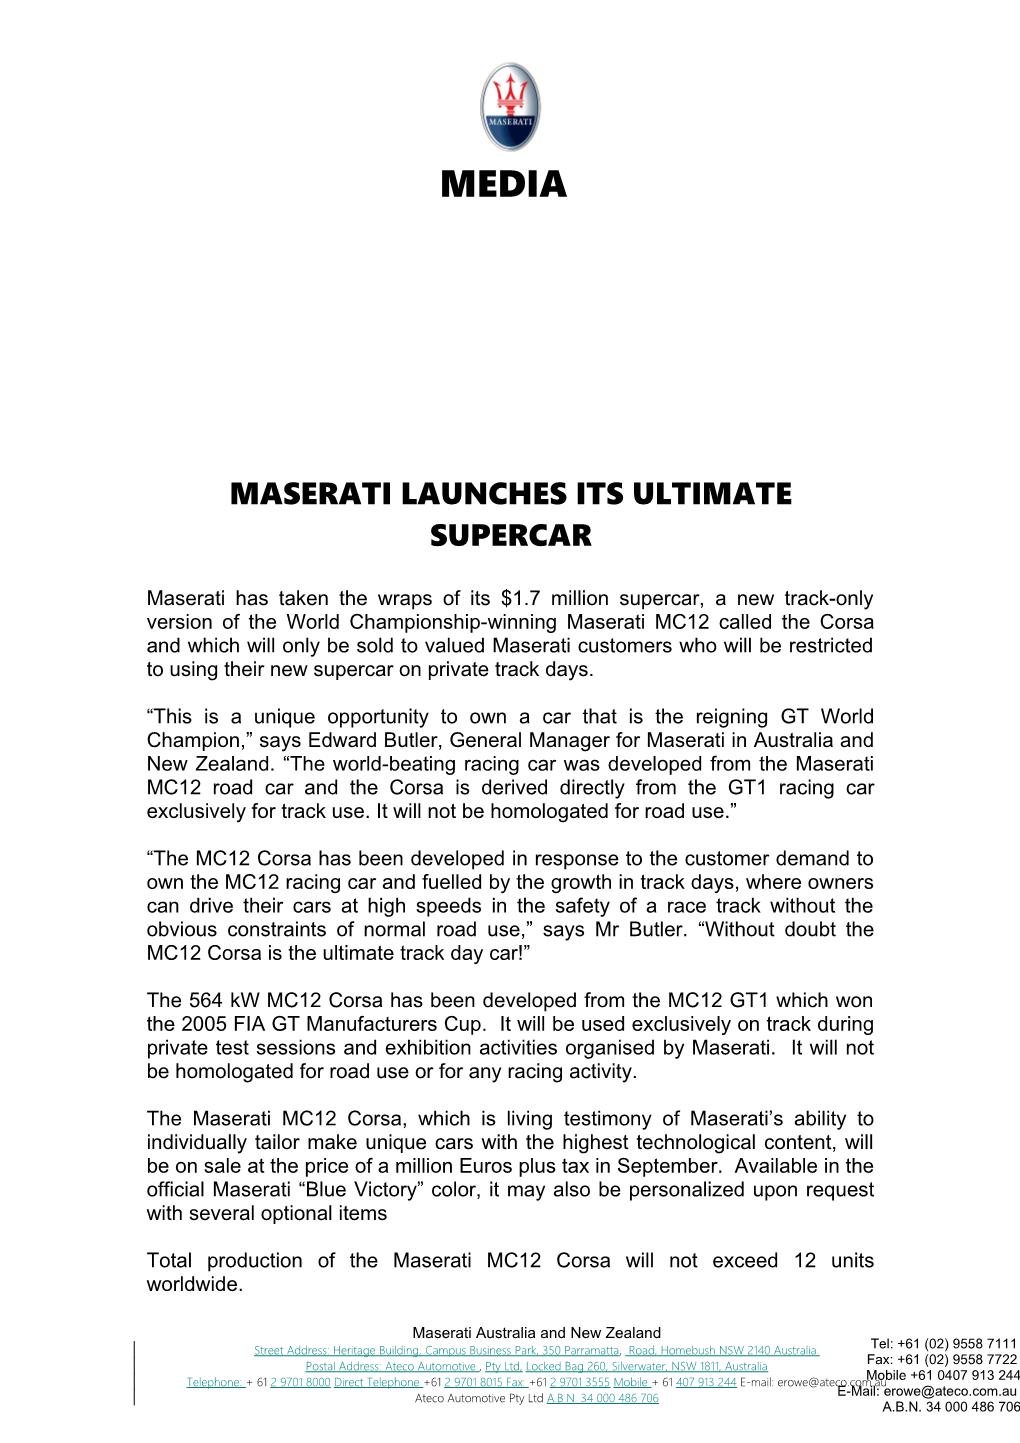 Maserati Launches Its Ultimate Supercar